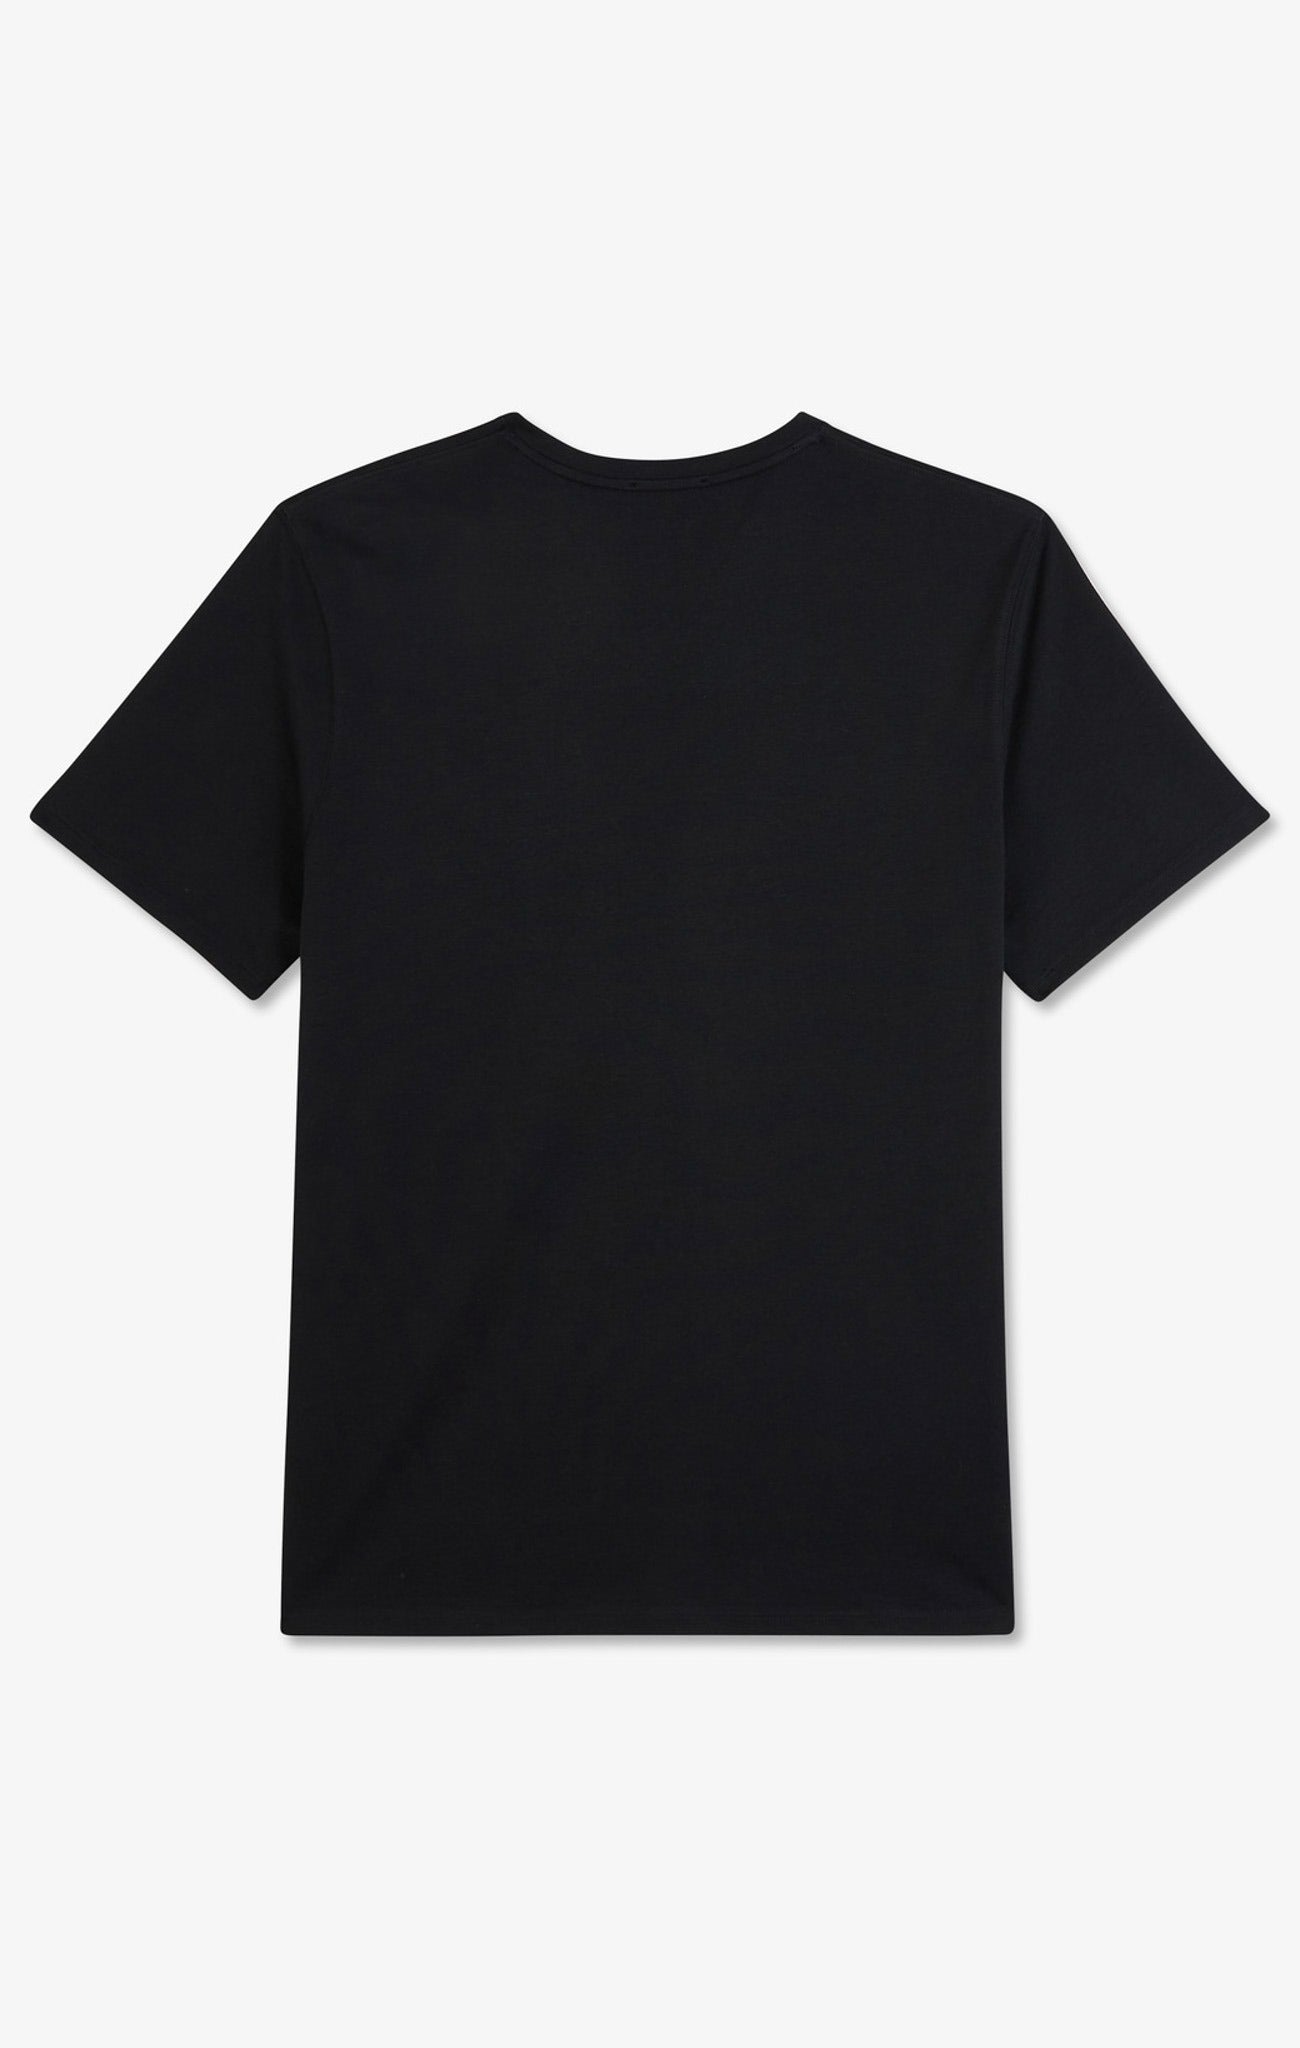 Crew neck black pima cotton t-shirt